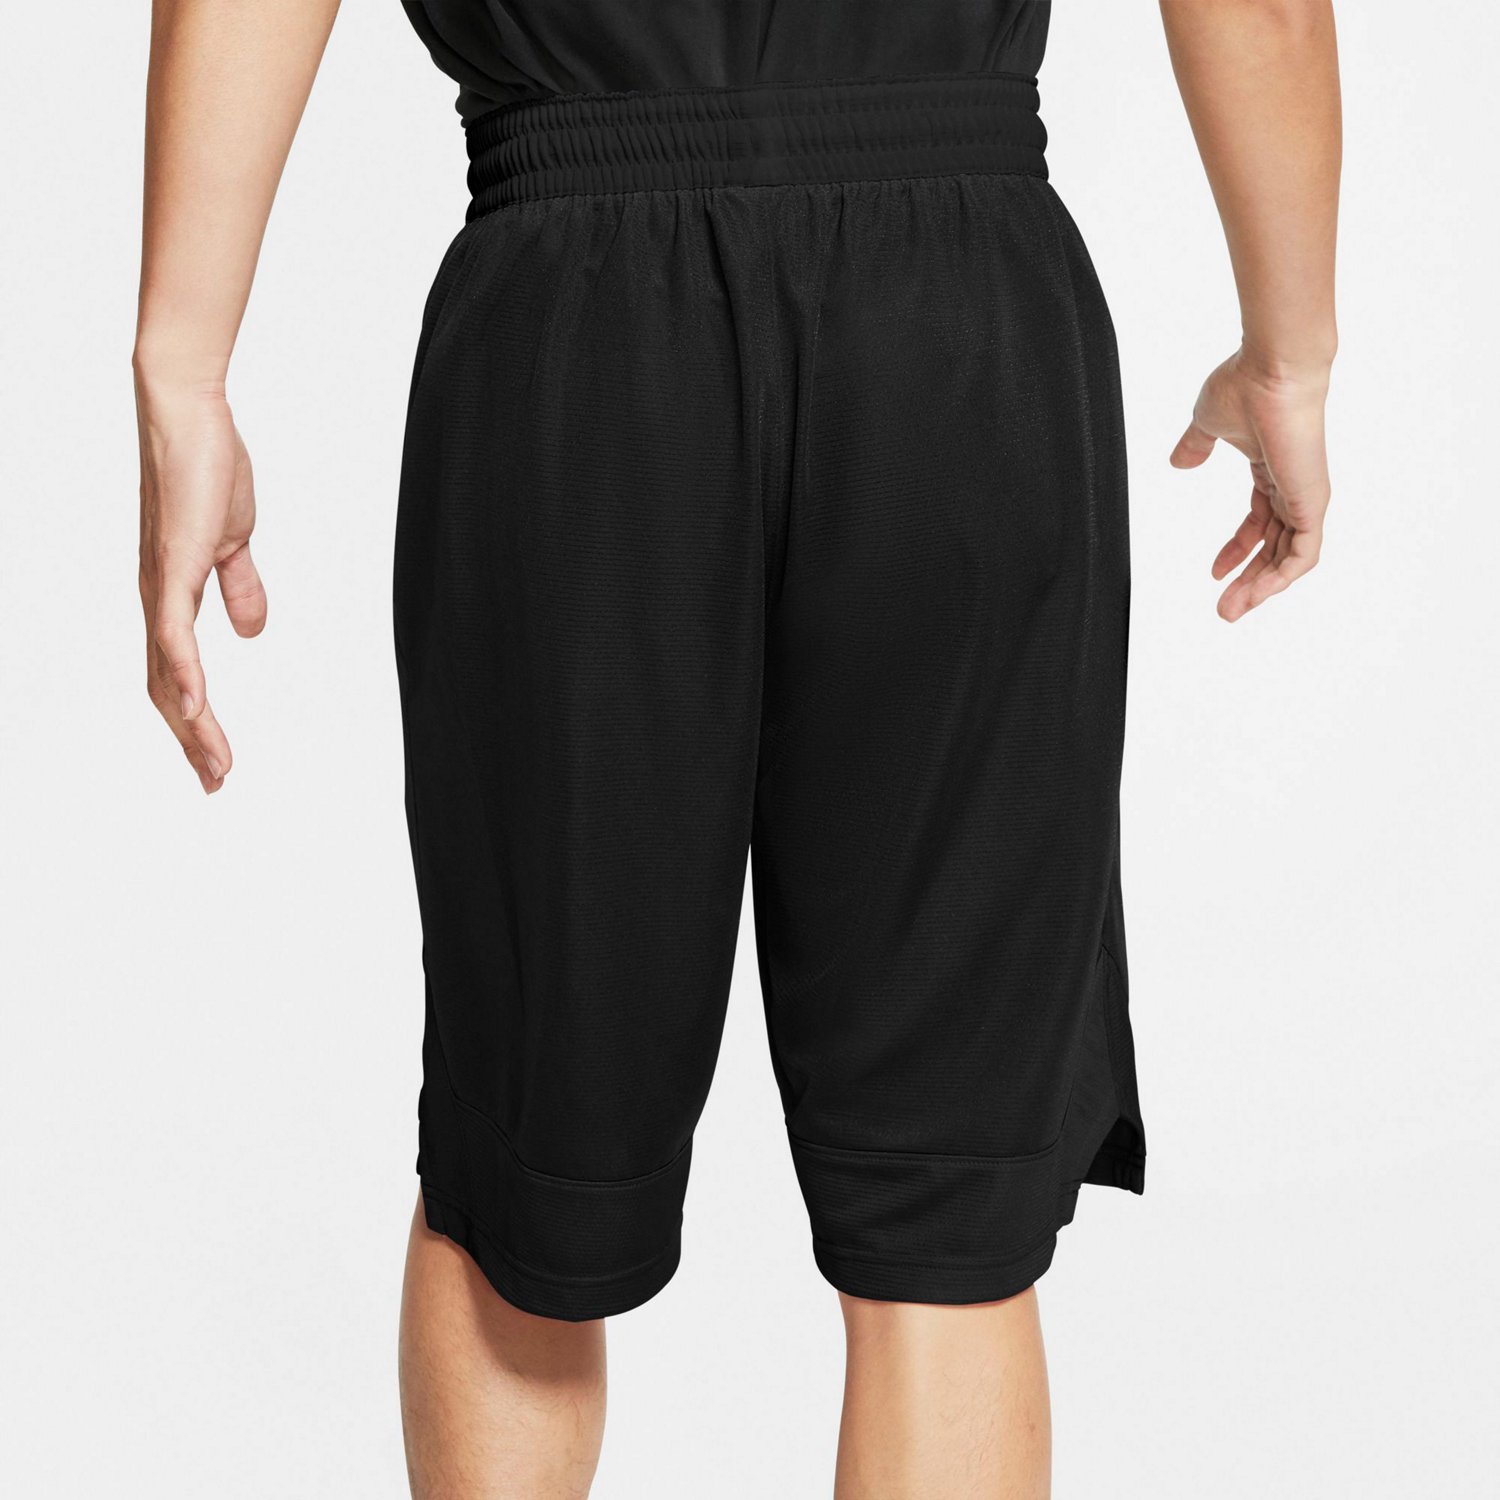 Nike Dri-FIT Icon Men's Basketball Shorts